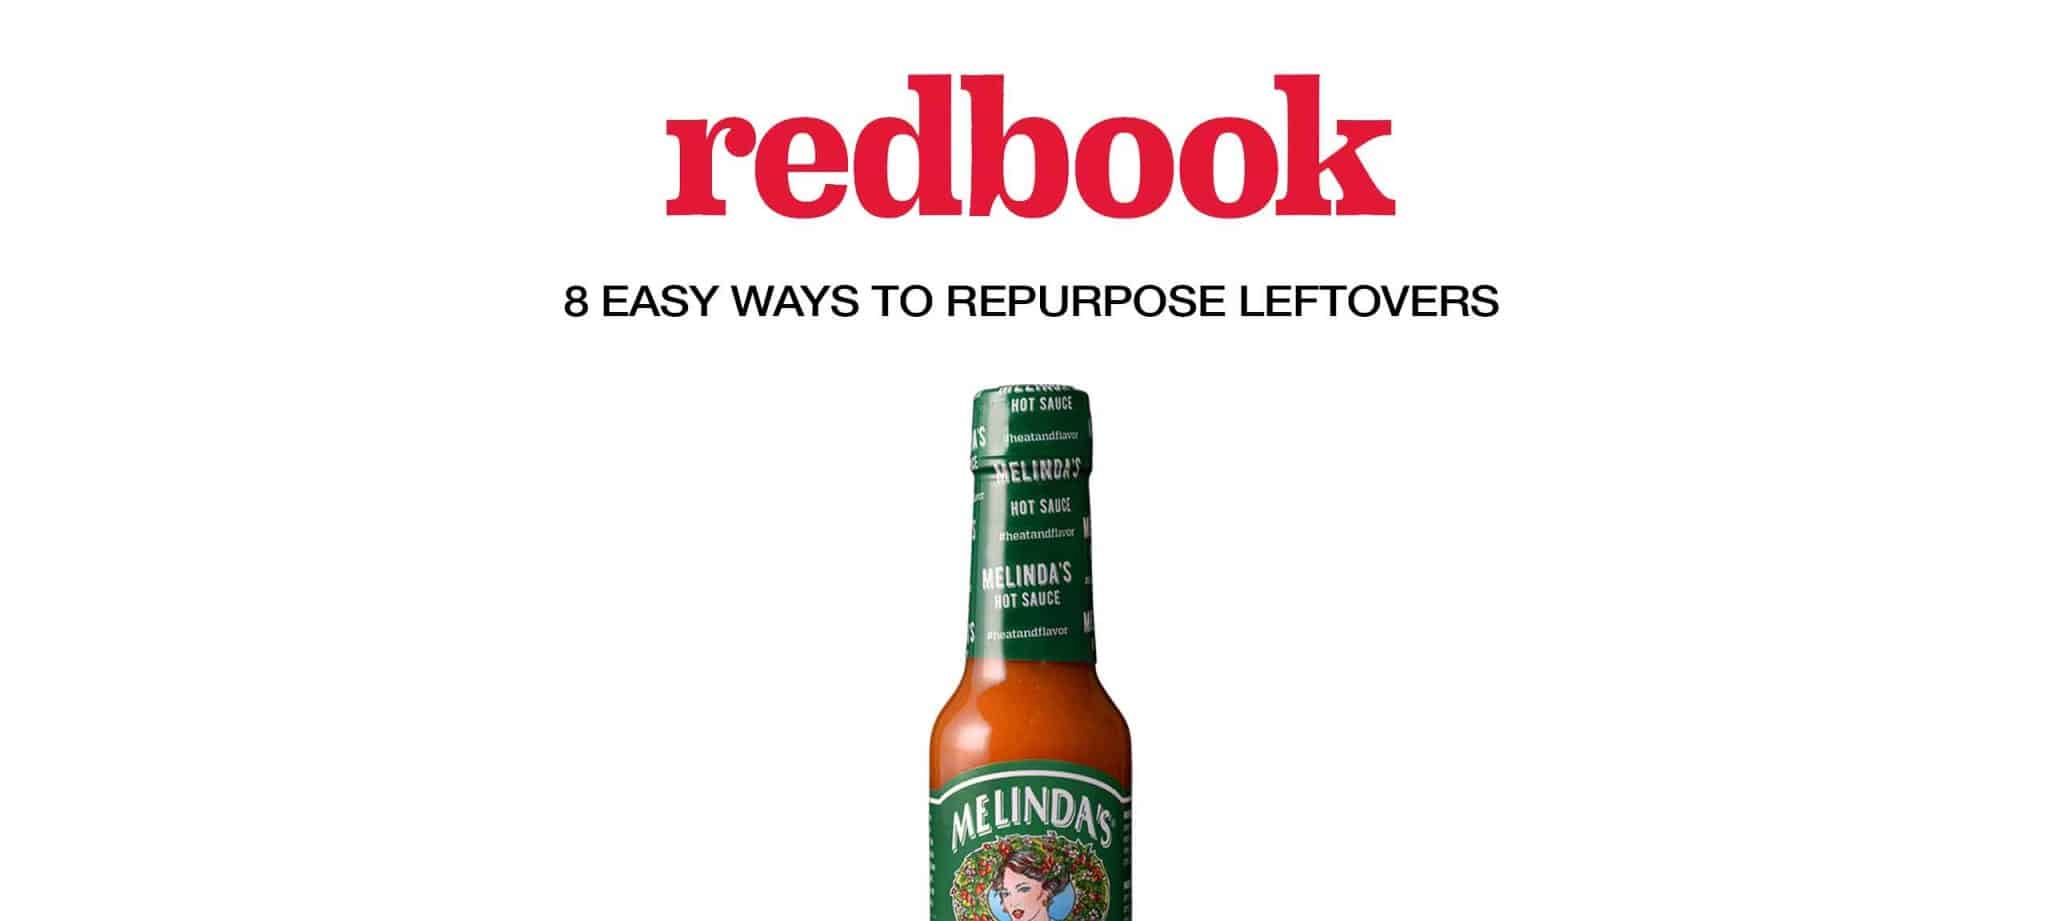 8 Easy Ways to Repurpose Leftovers | Says Redbook